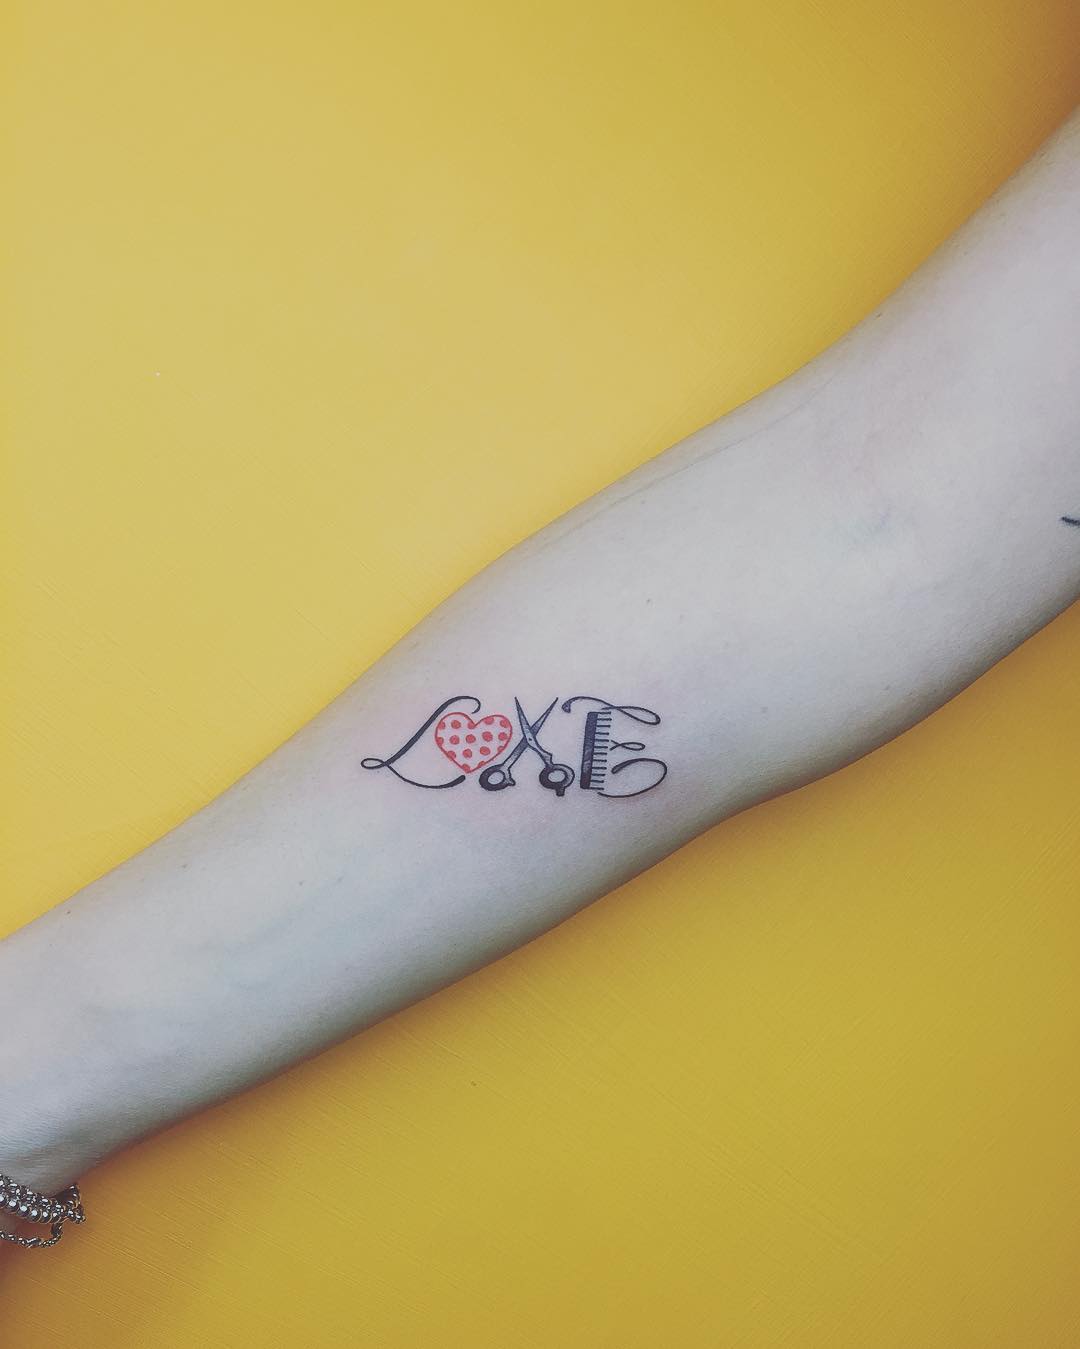 Love Micro Tattoo On Arm